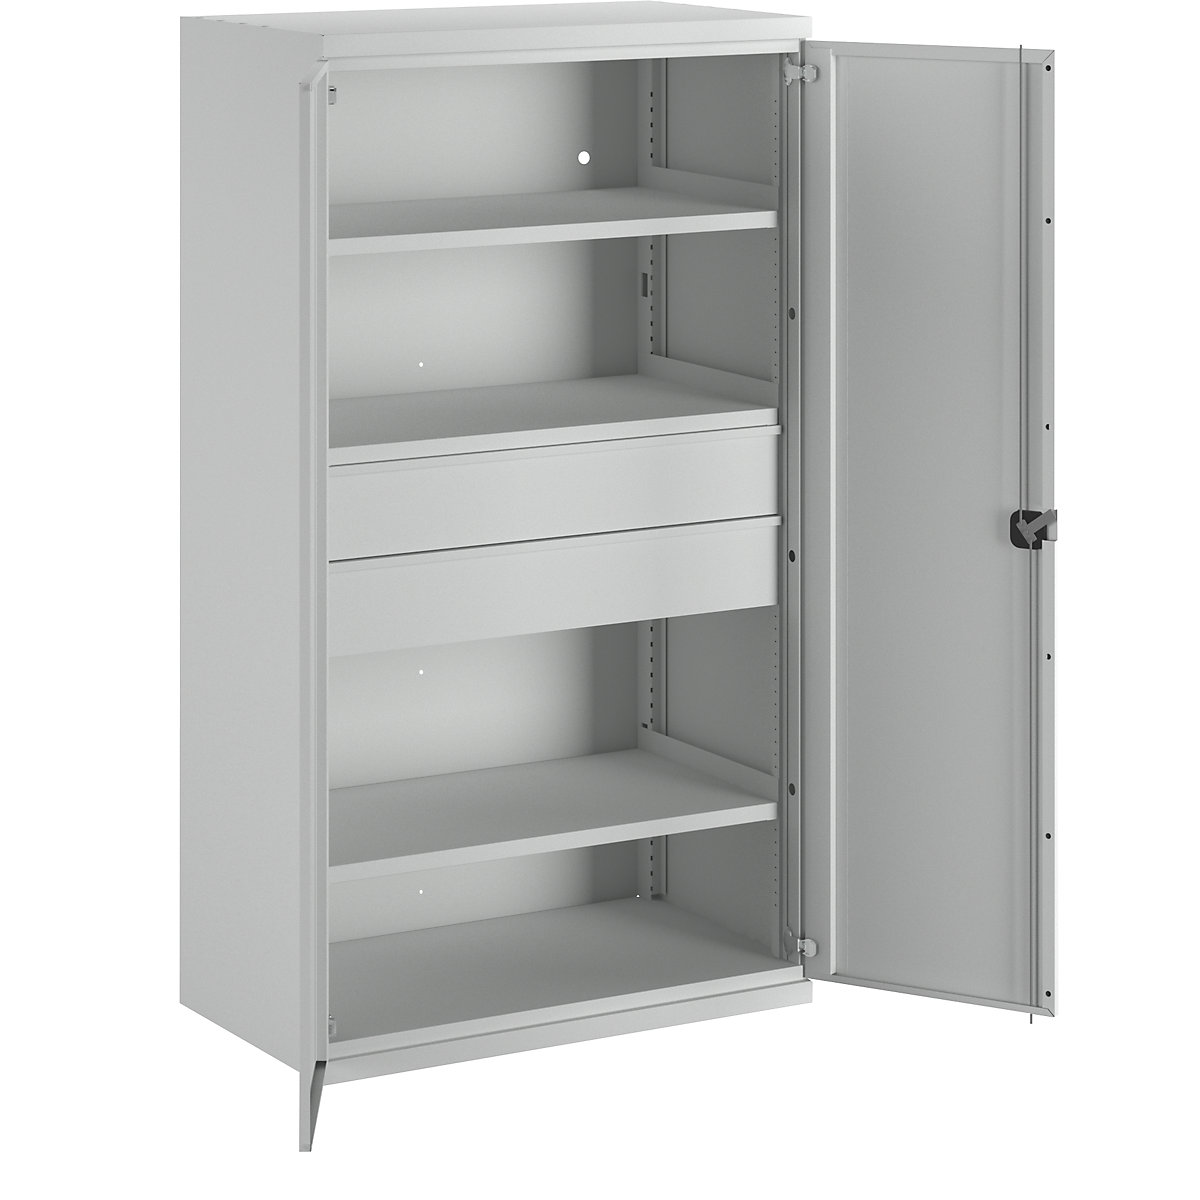 Heavy duty cupboard made of steel – eurokraft pro, 3 shelves, 2 x 180 mm high drawers, light grey / light grey-3